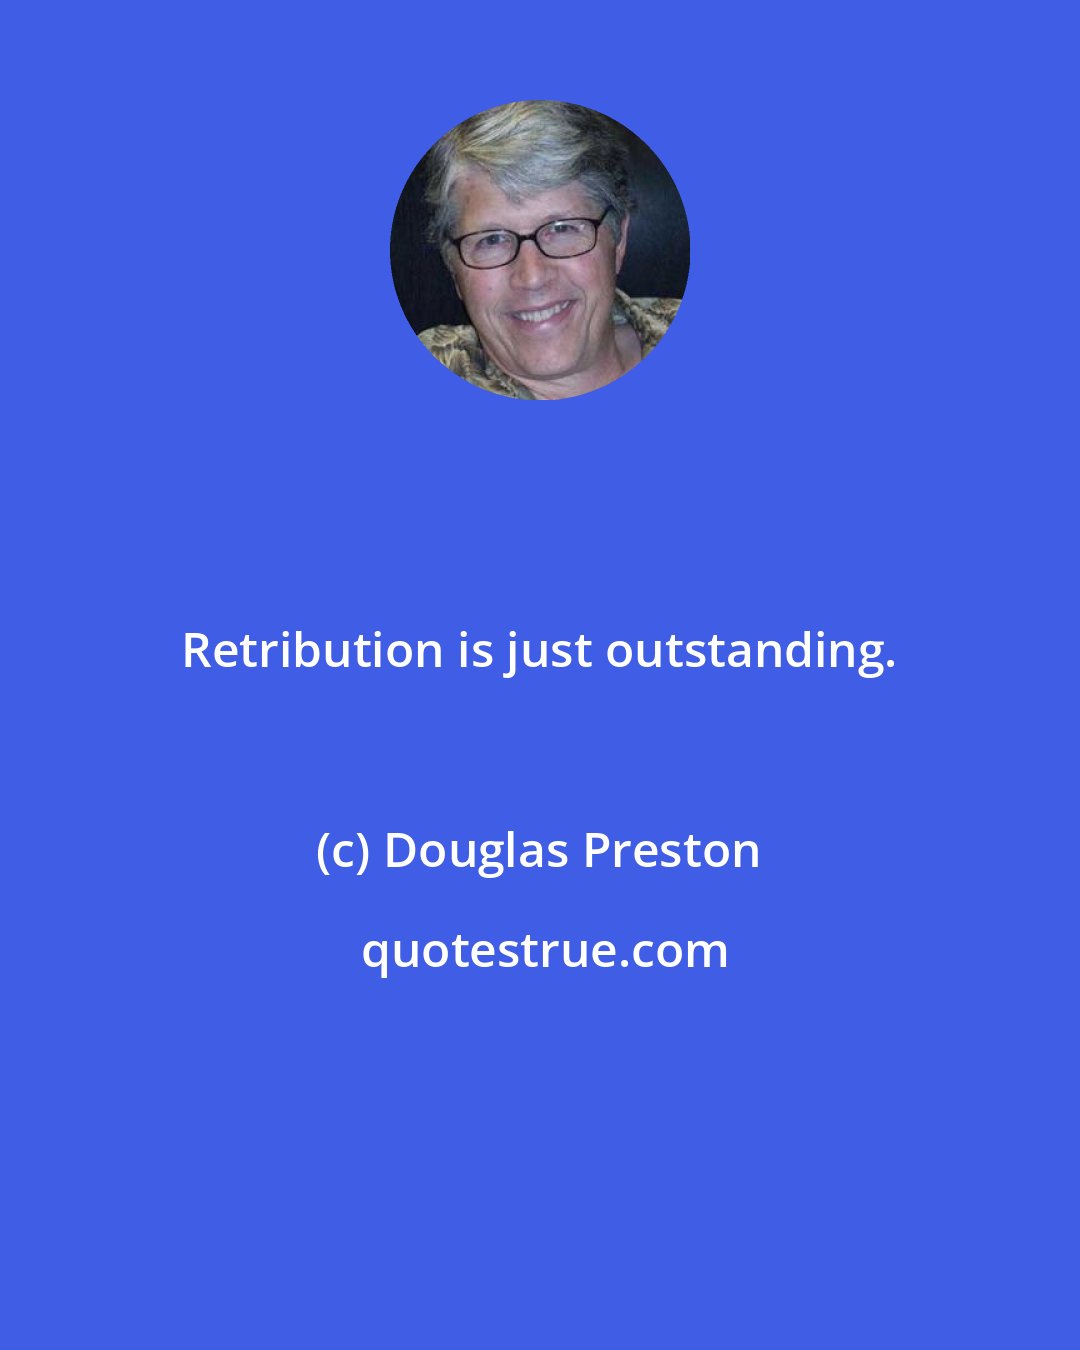 Douglas Preston: Retribution is just outstanding.